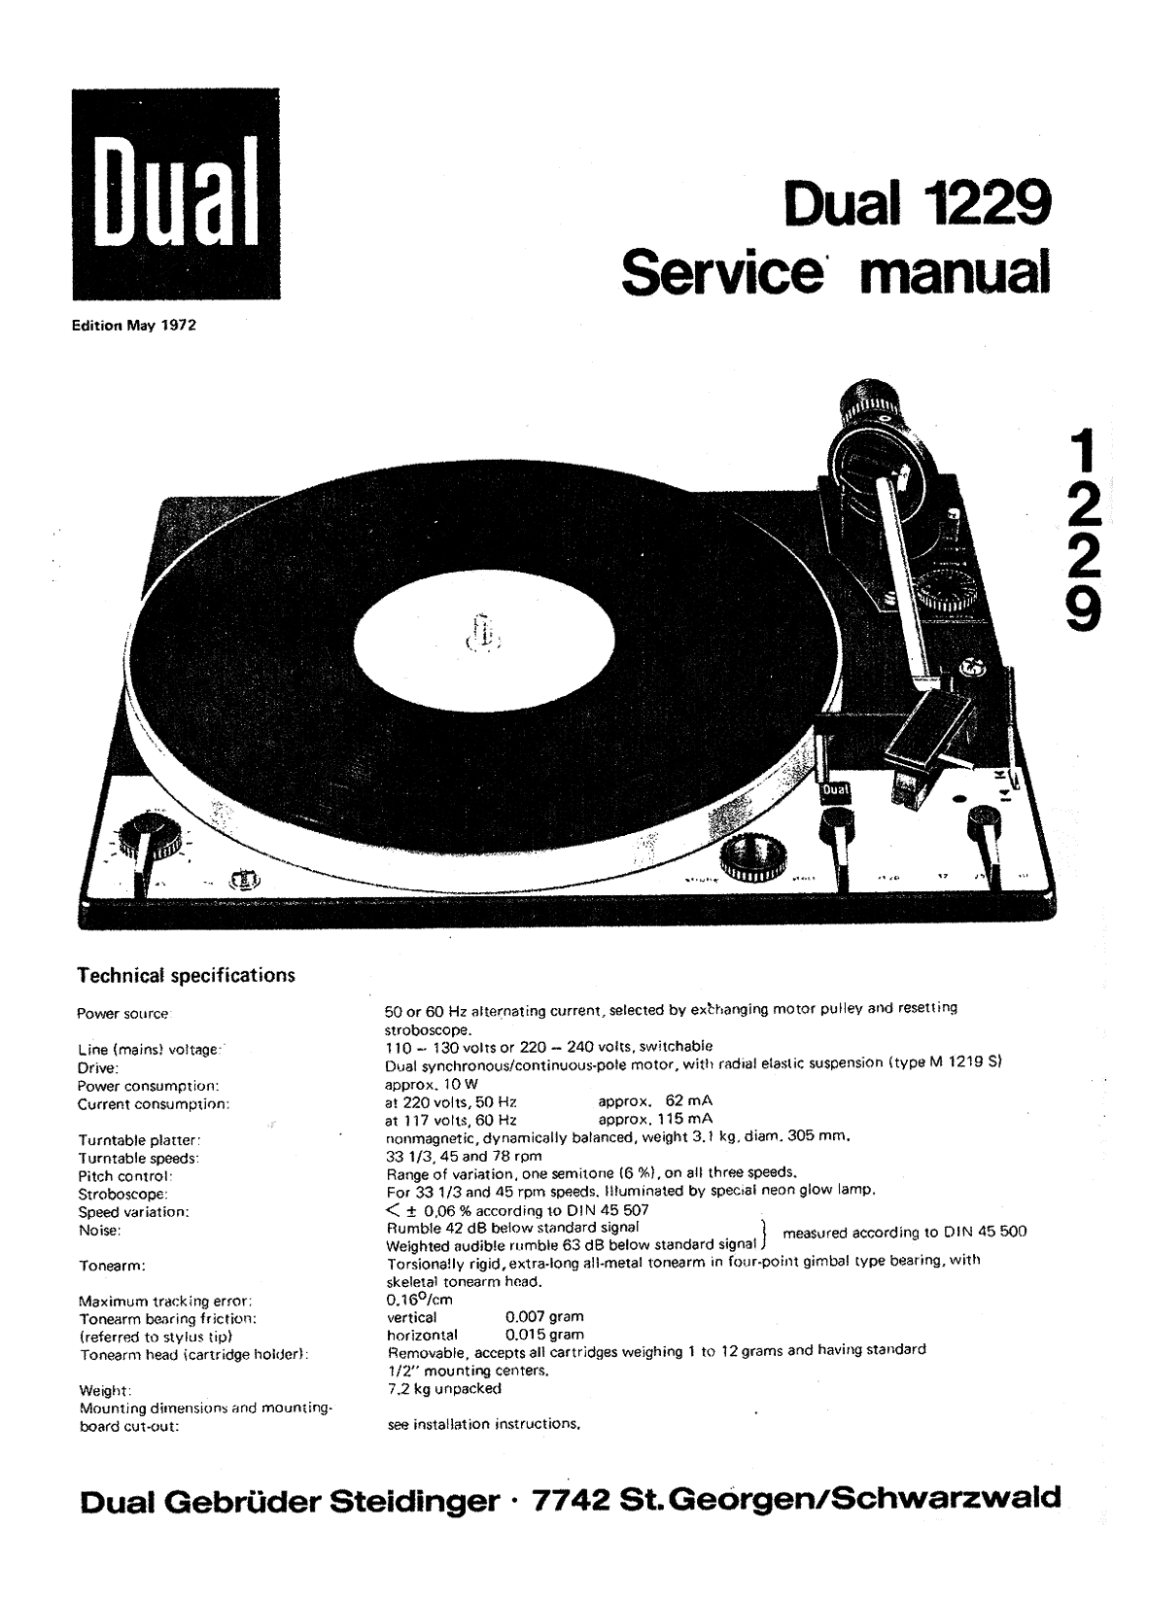 Dual 1229 Service manual